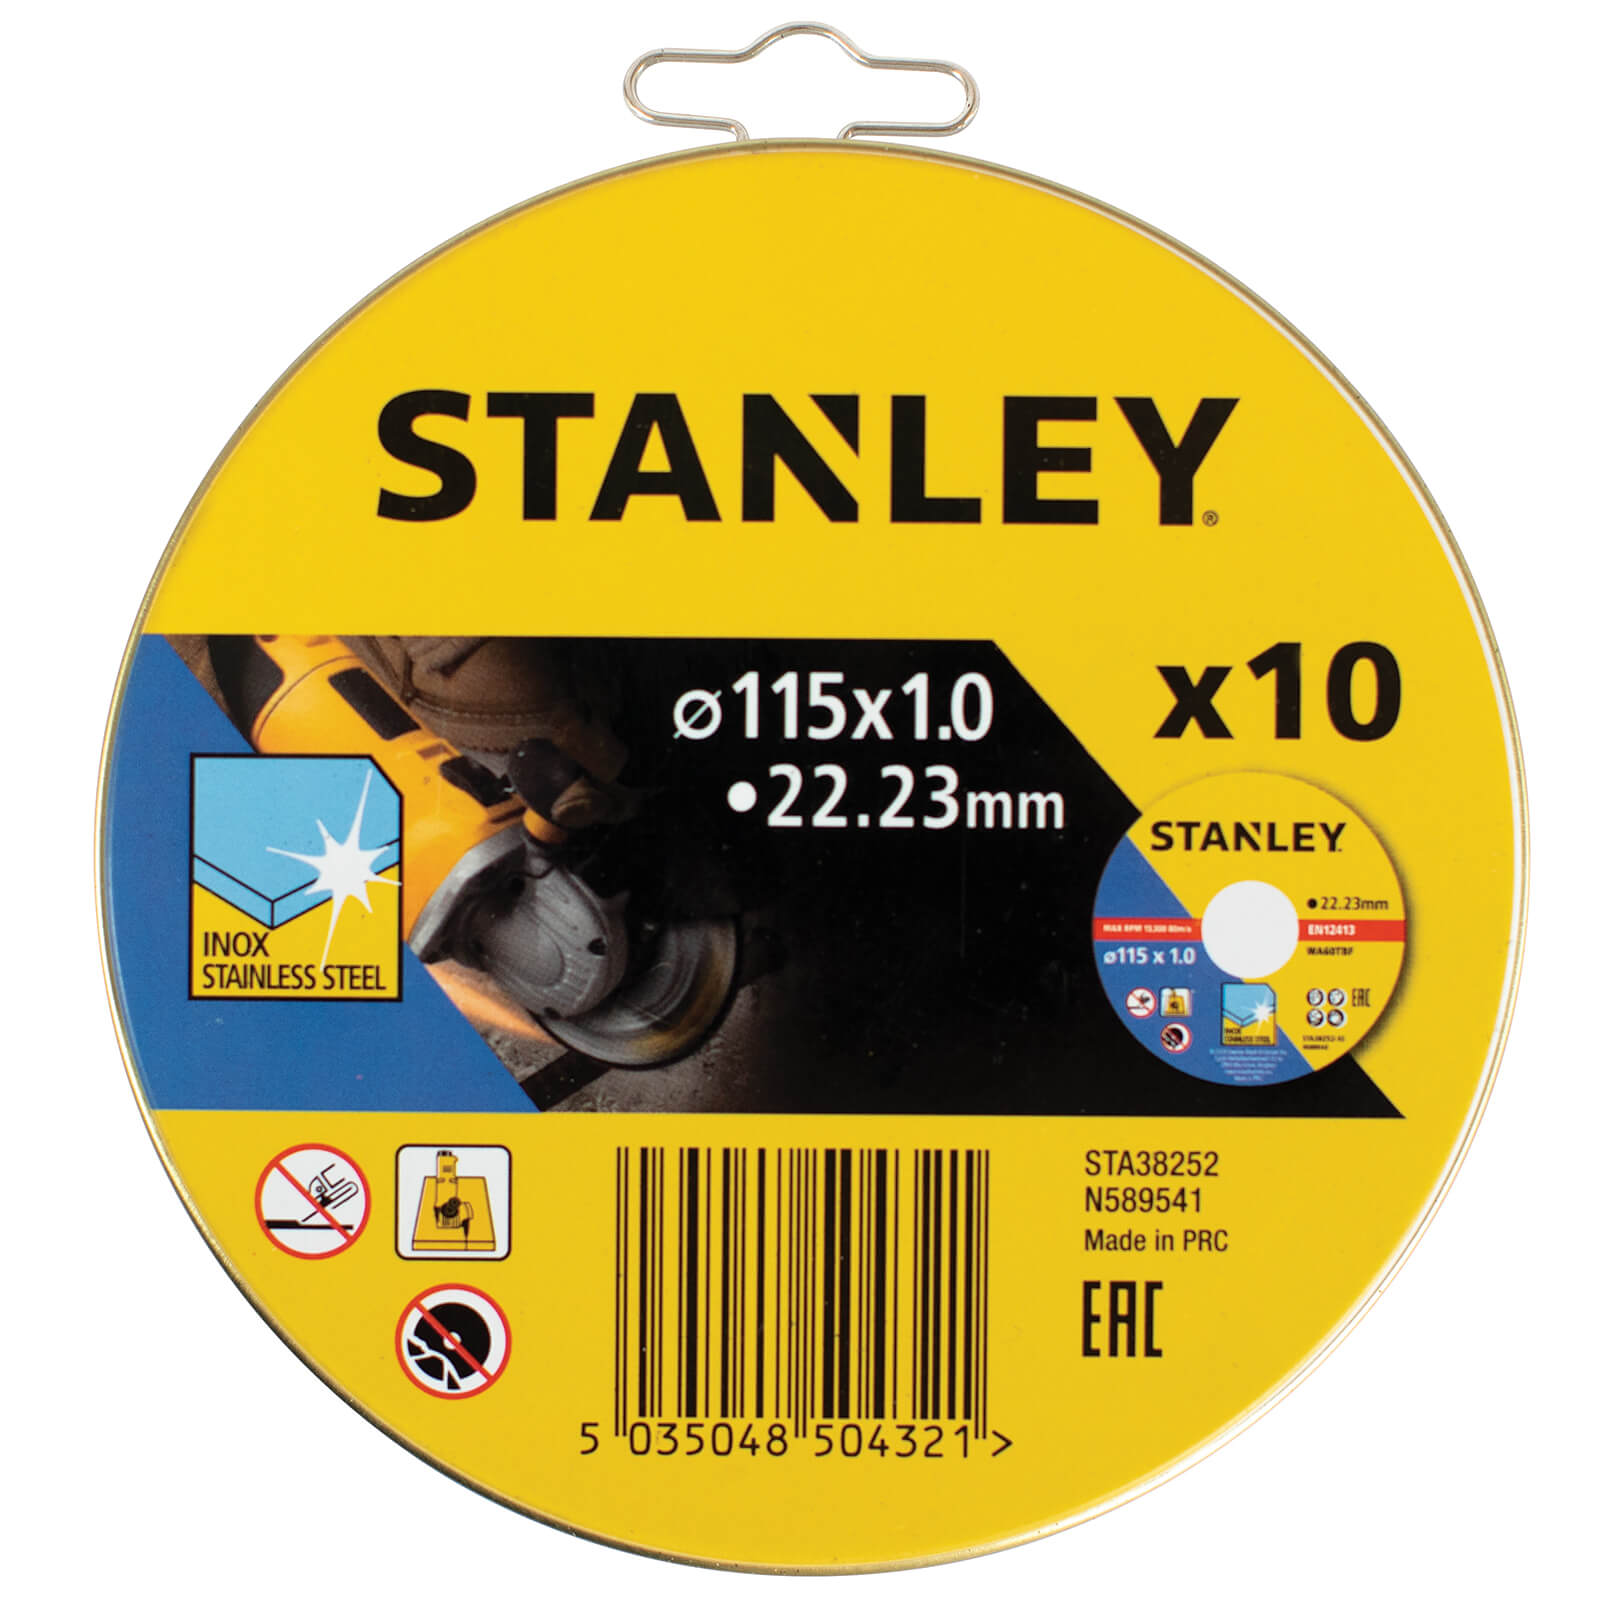 STANLEY 10x Cutting Discs - 115 x 1mm